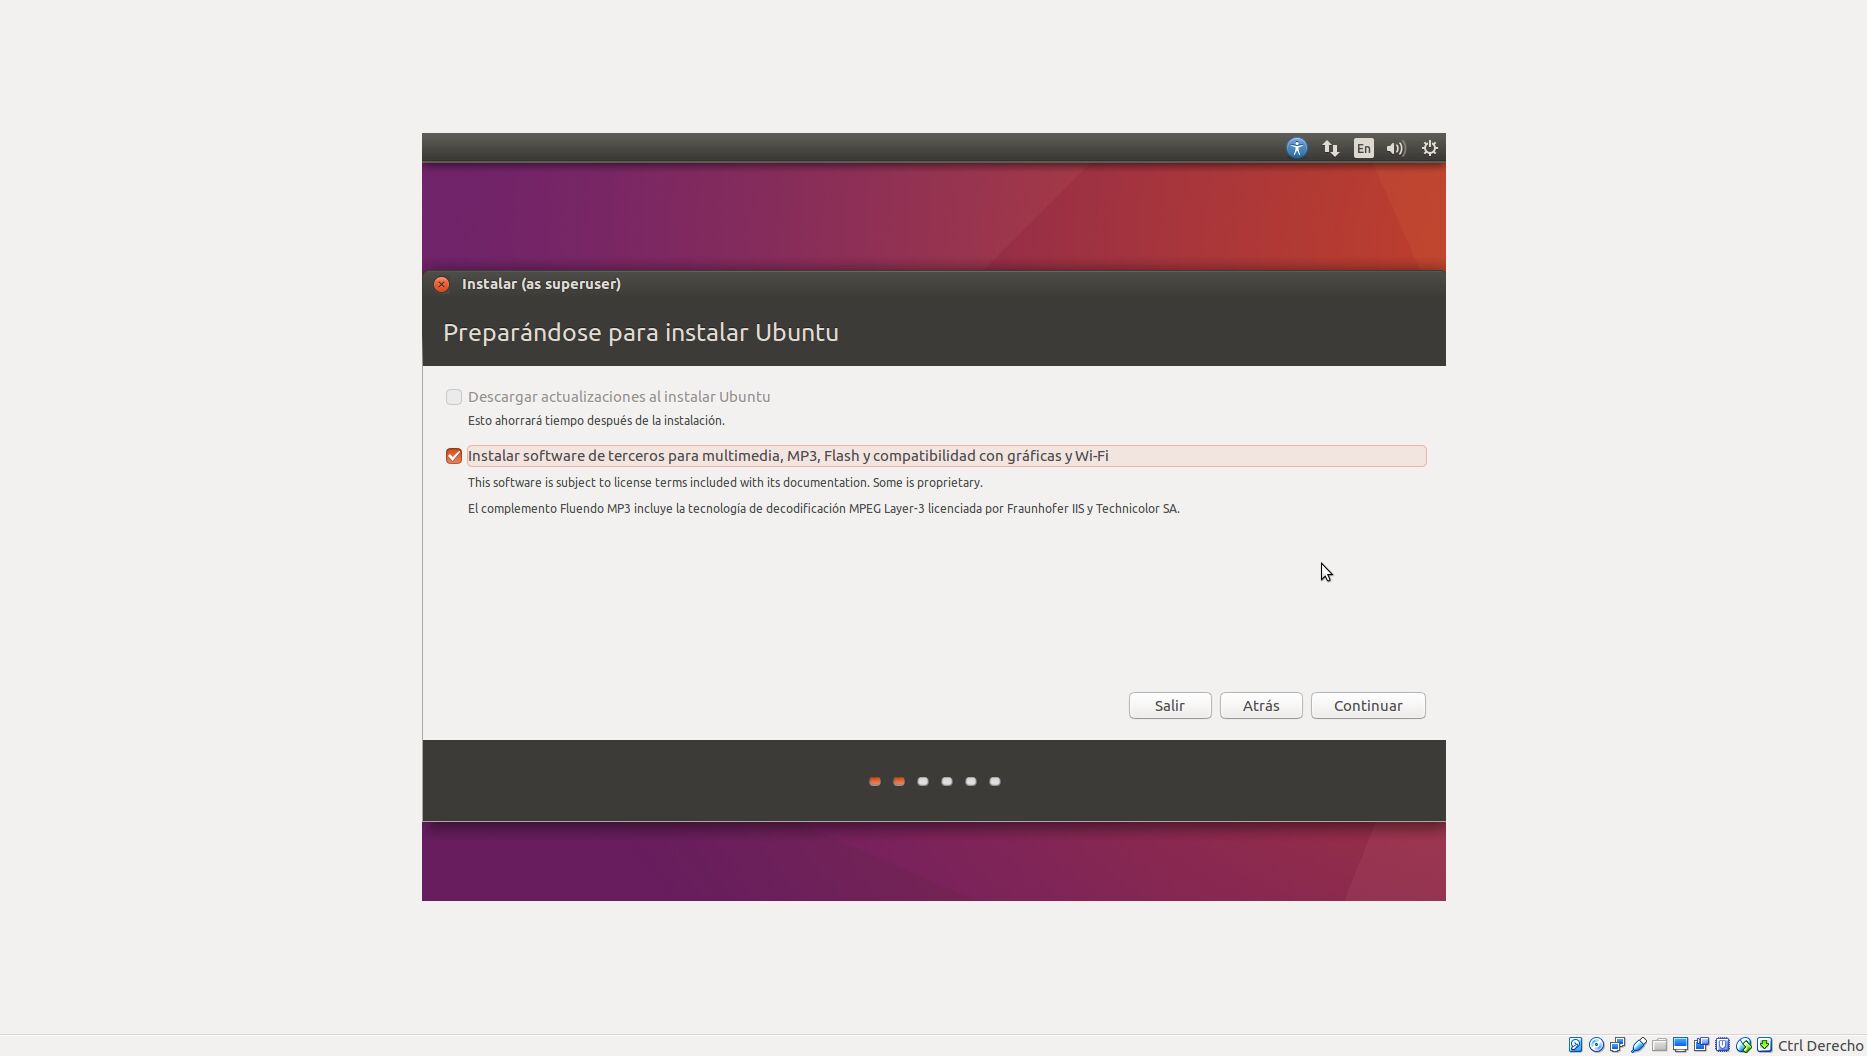 Instalar software de terceros en Ubuntu